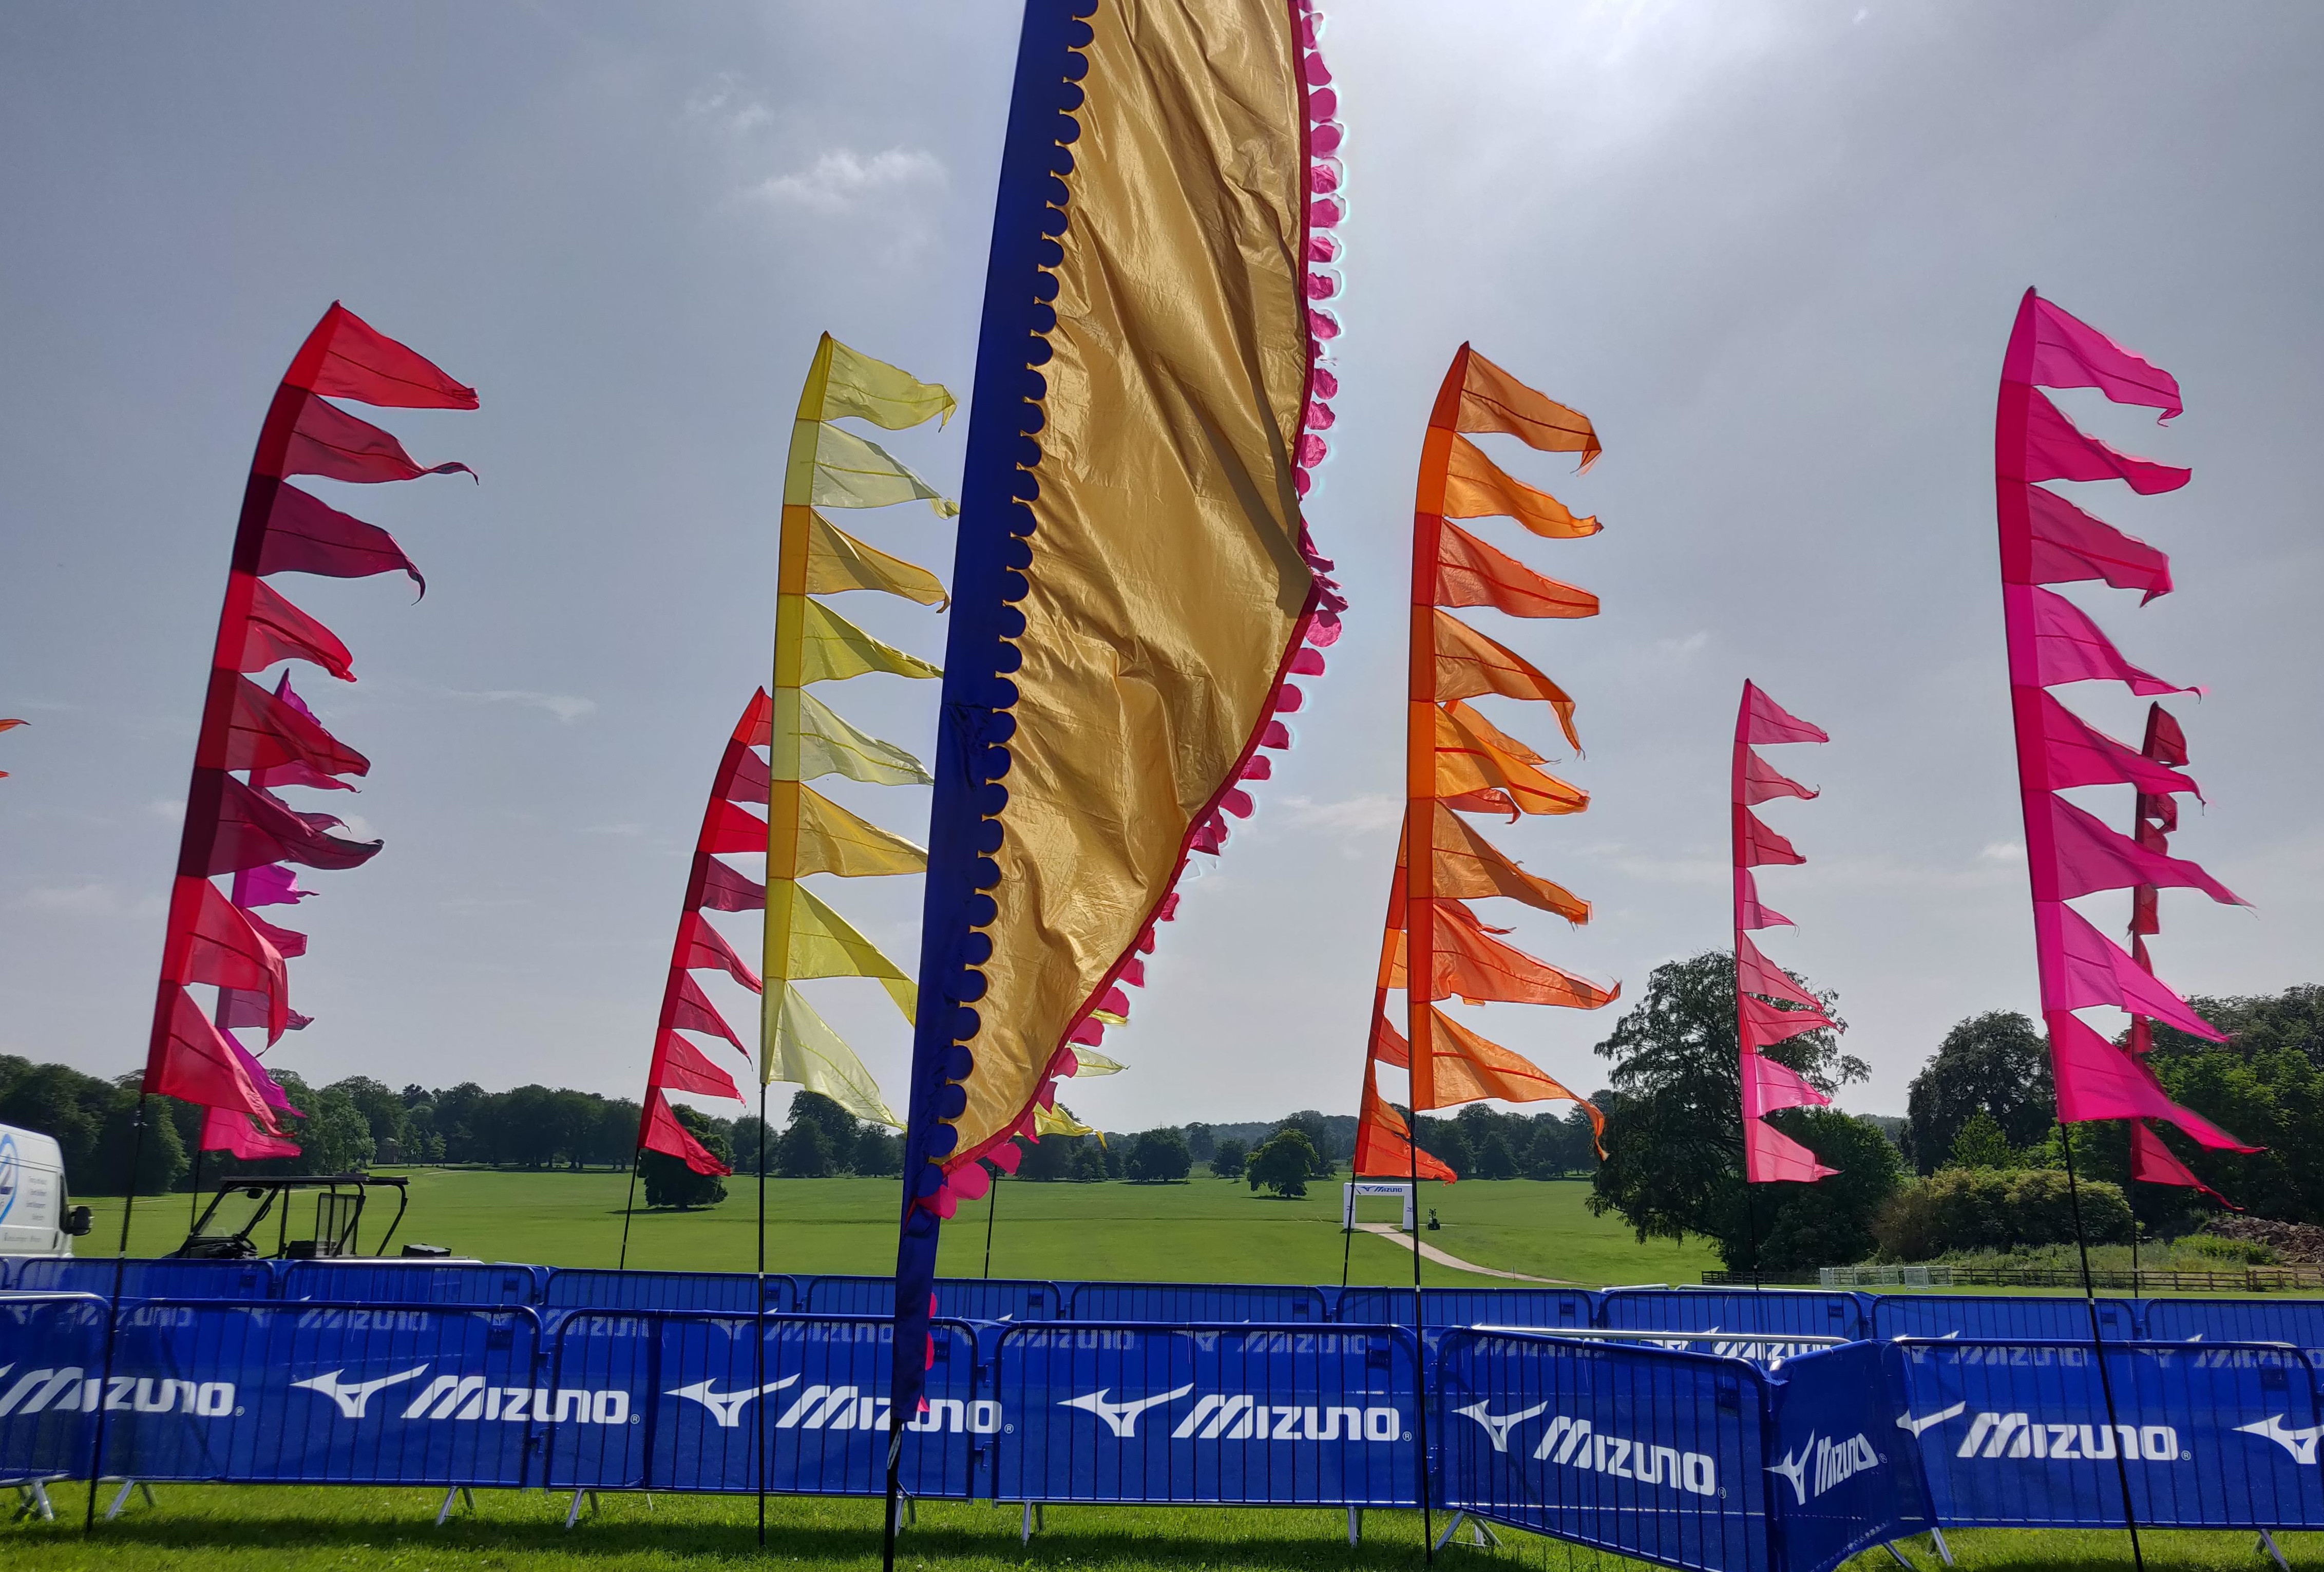 Festival flags of Endure24 Leeds 2019 sponsored by Mizuno